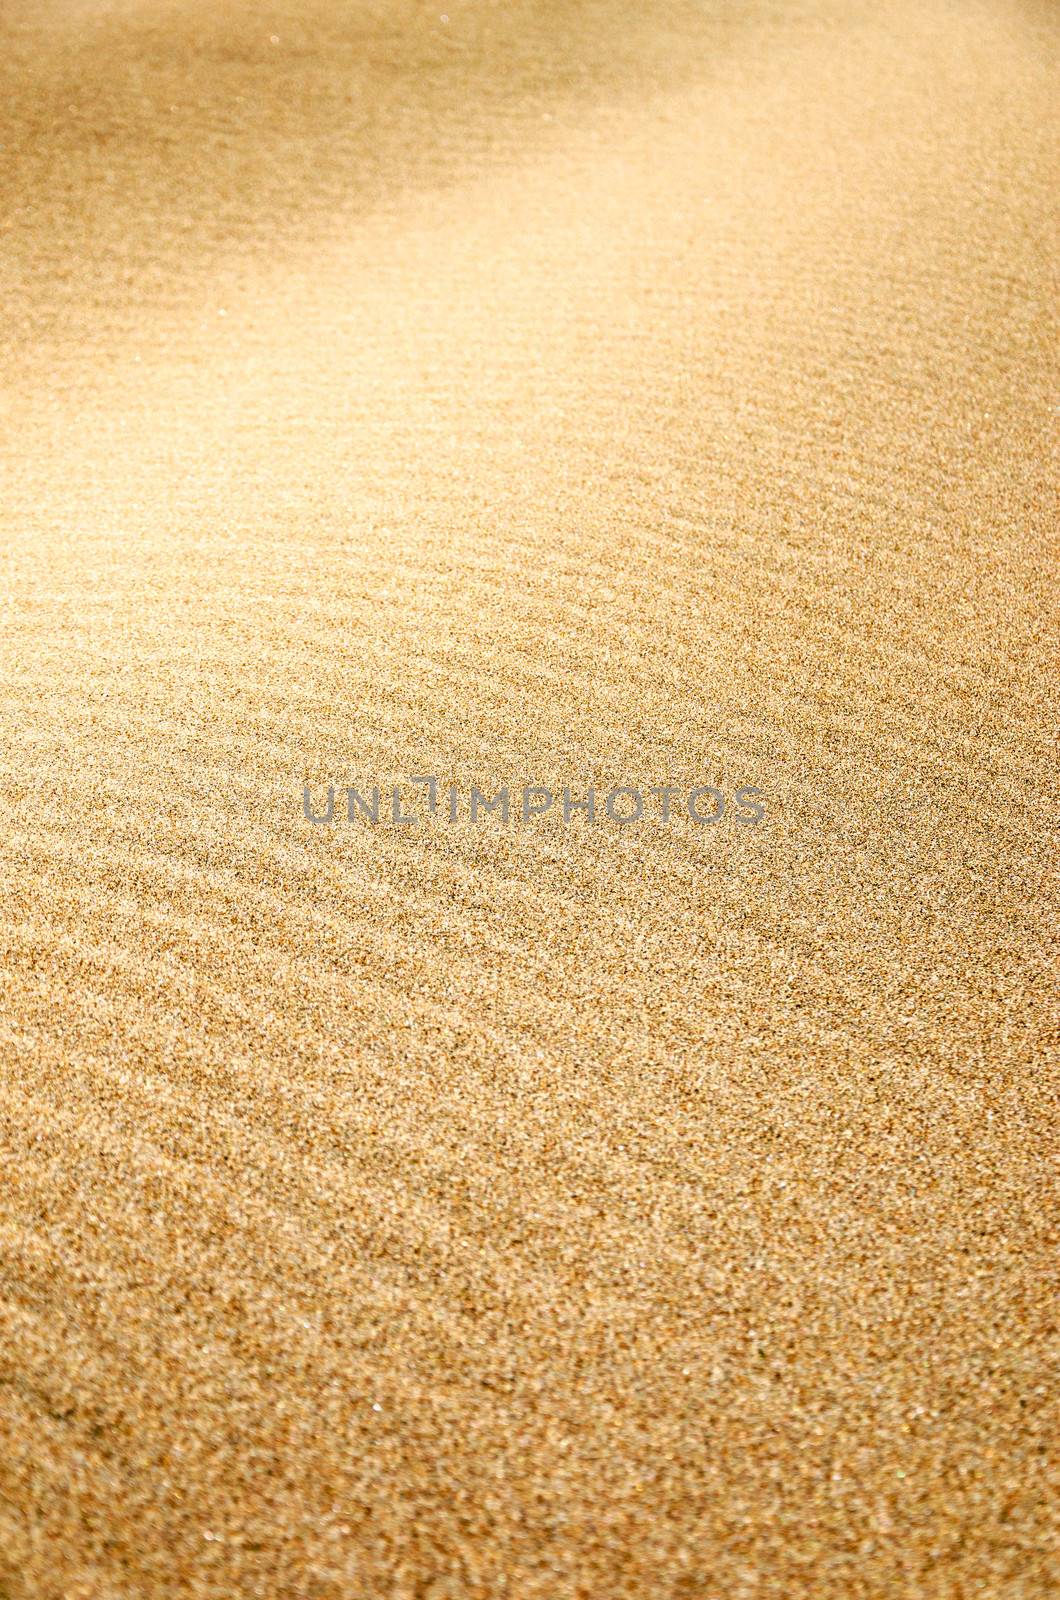 Sand texture on a beach in Oregon